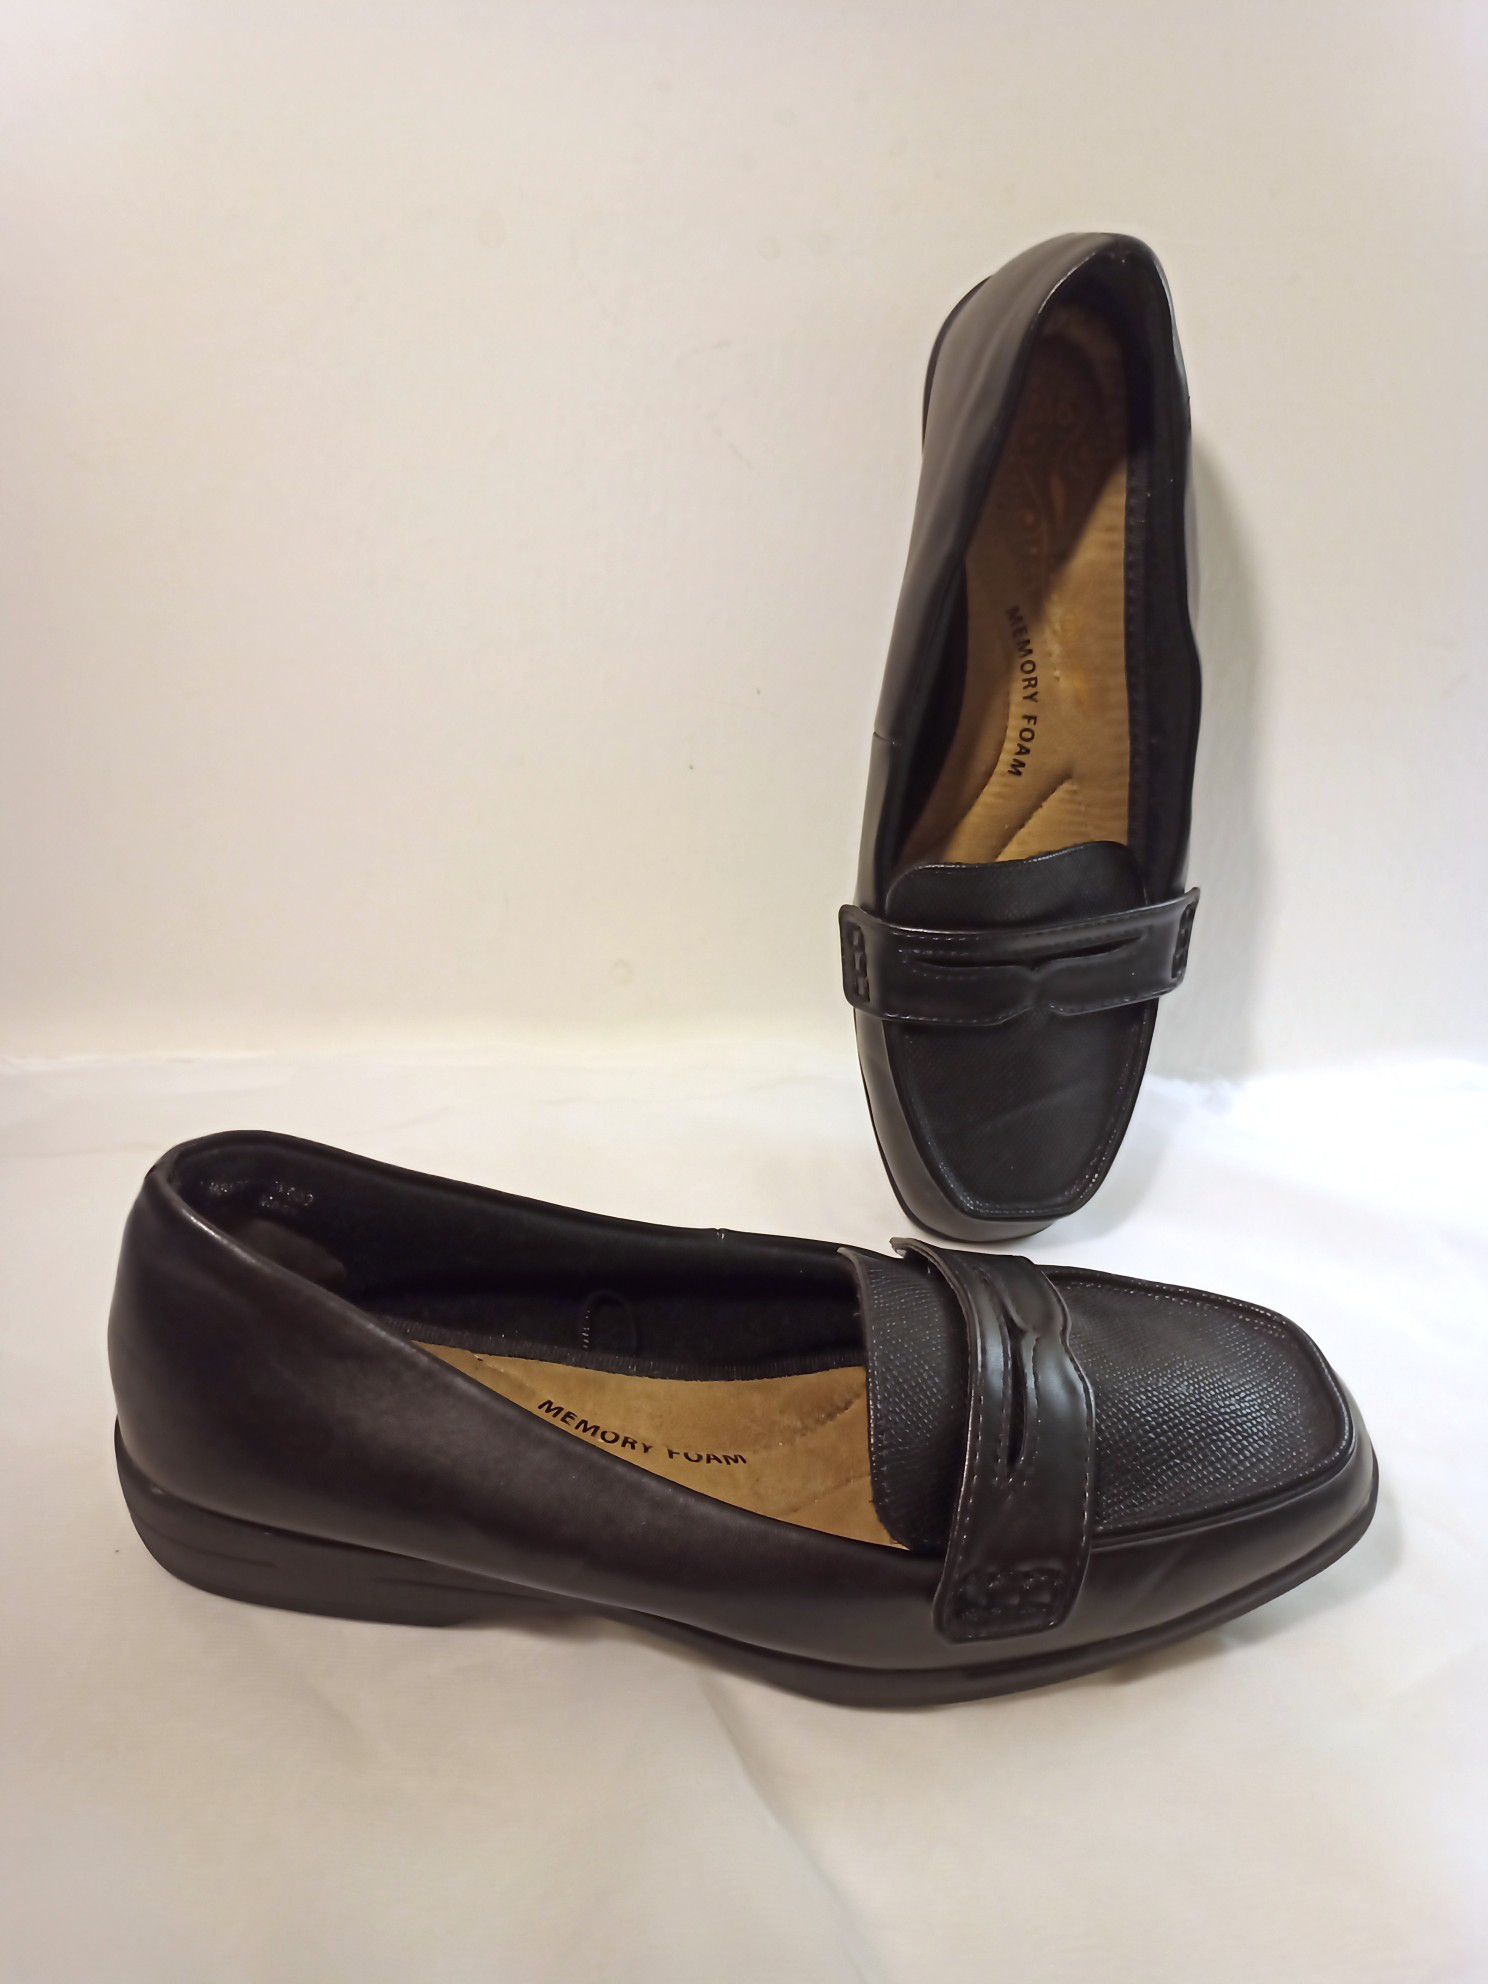 TIME & TRU Black Flat Loafers Women's Size 9W New